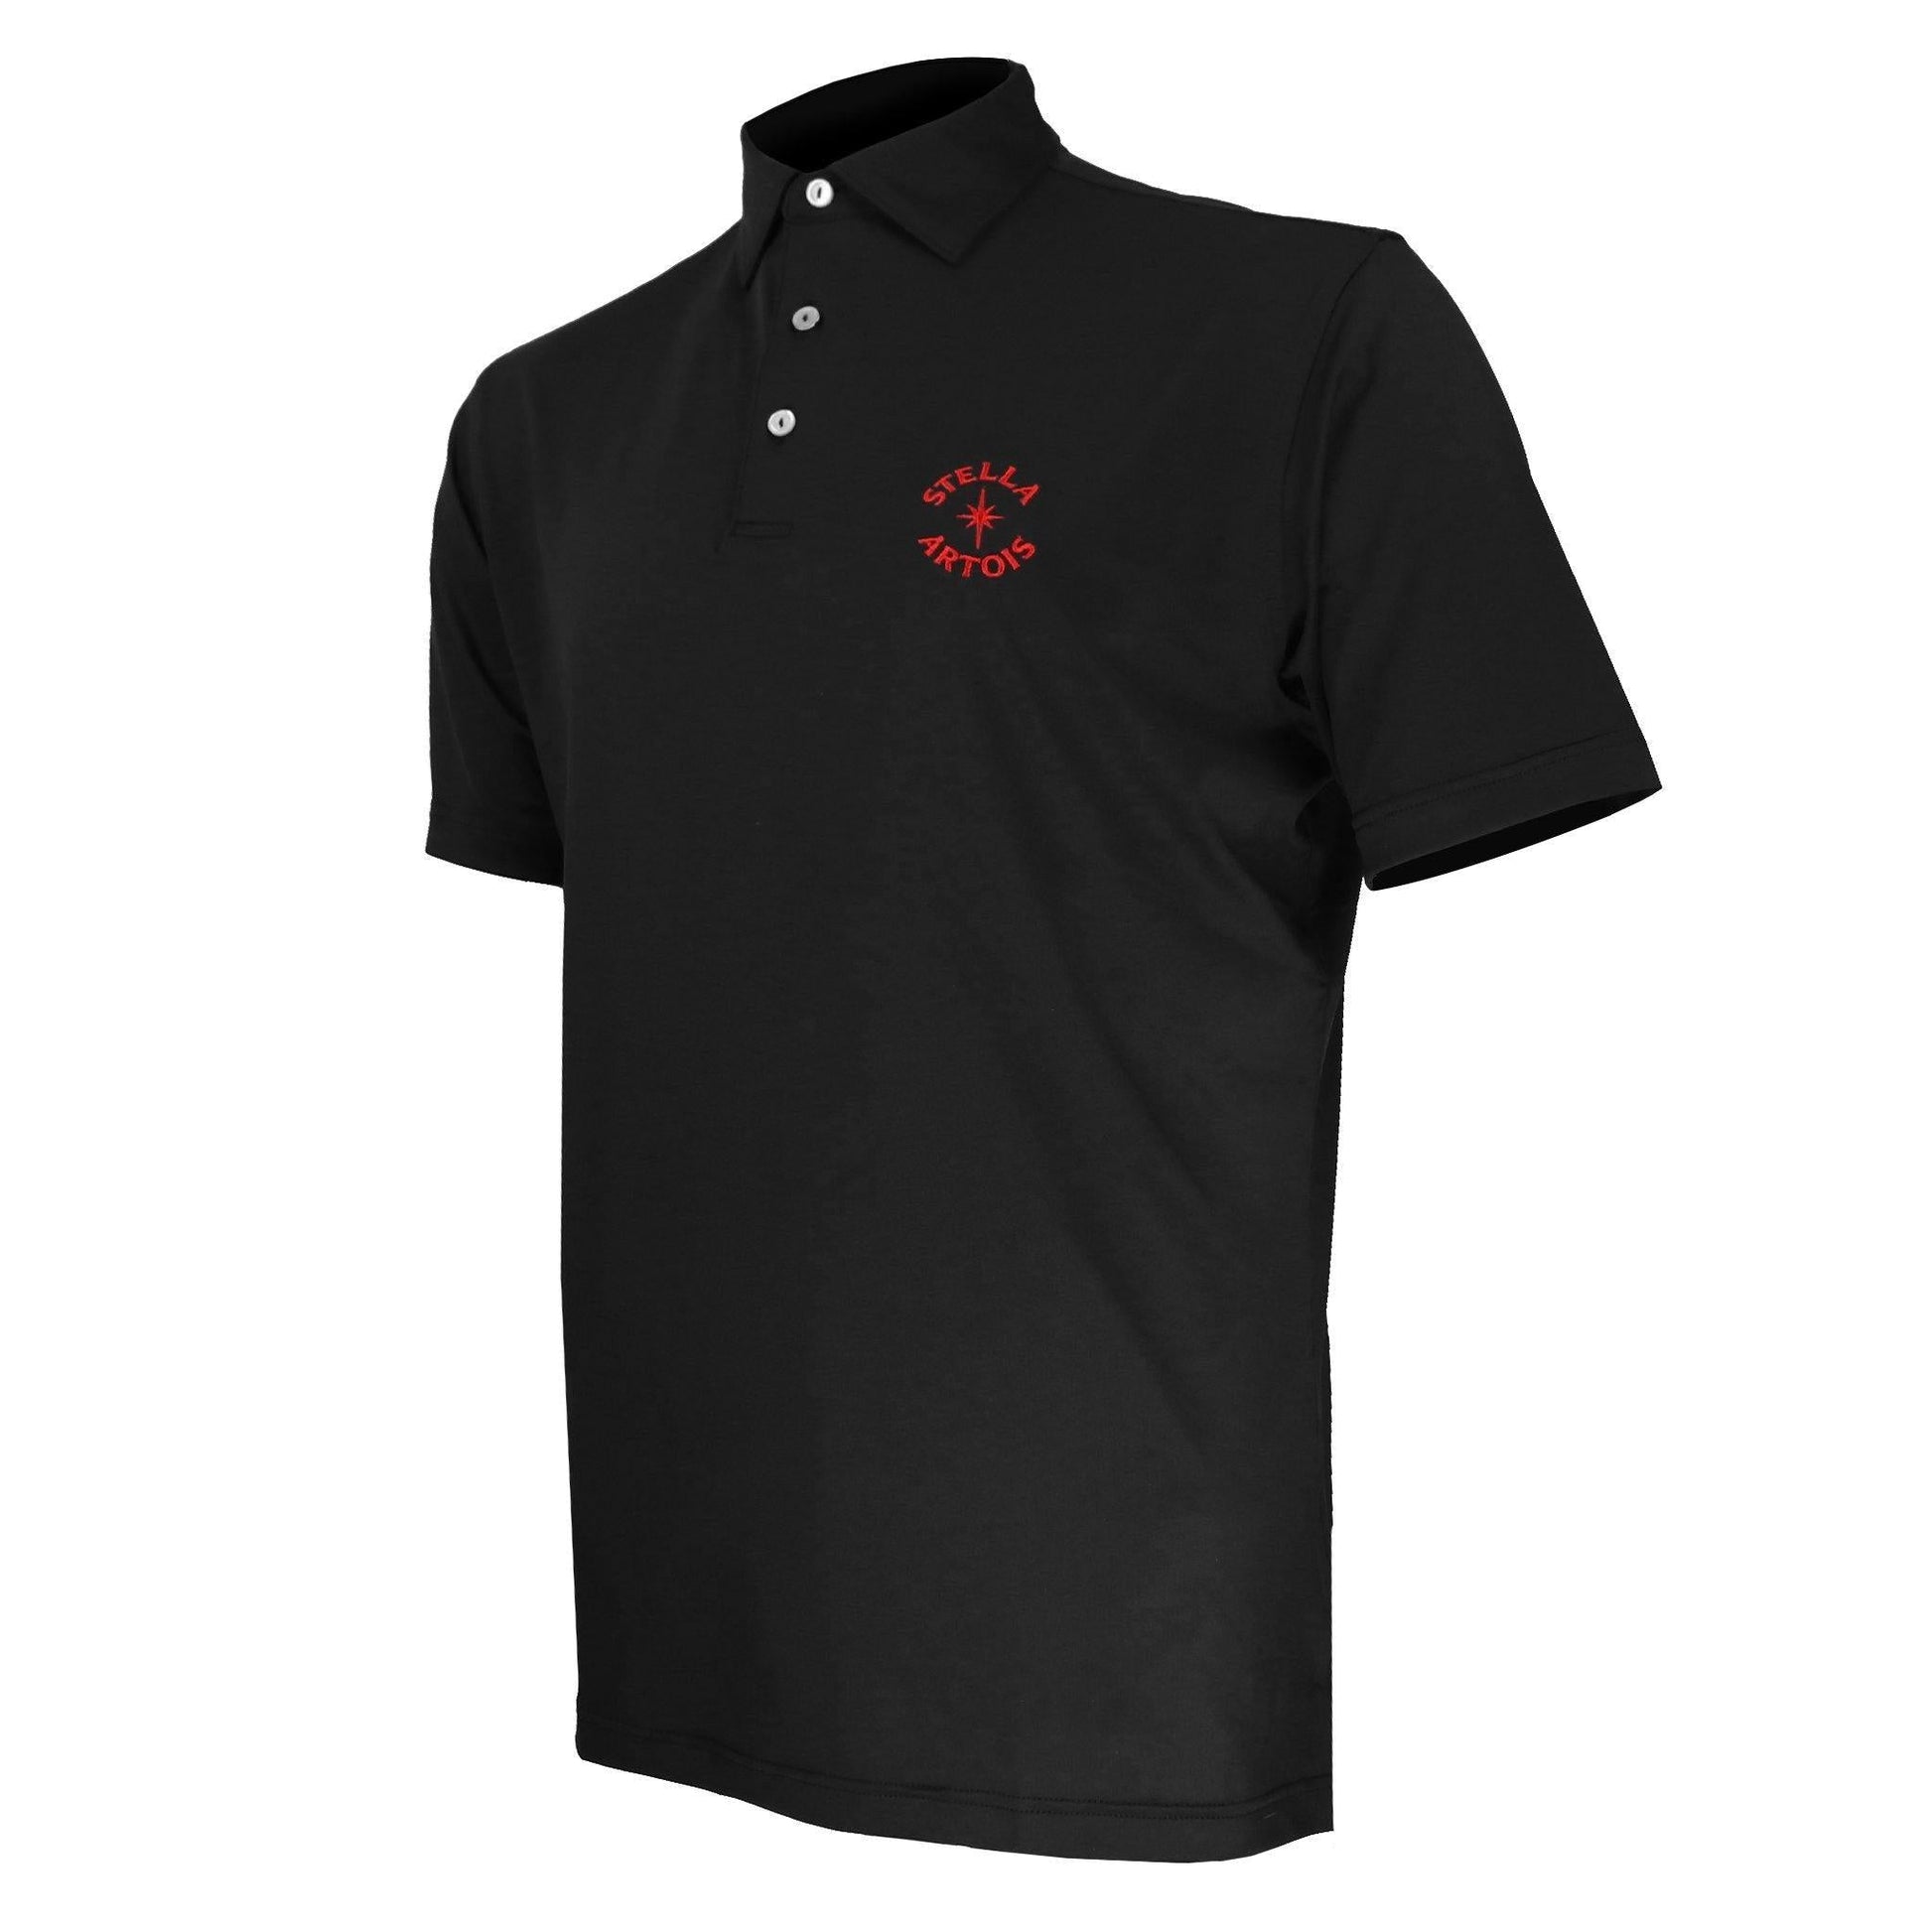 black polo with stella artois logo on left chest 